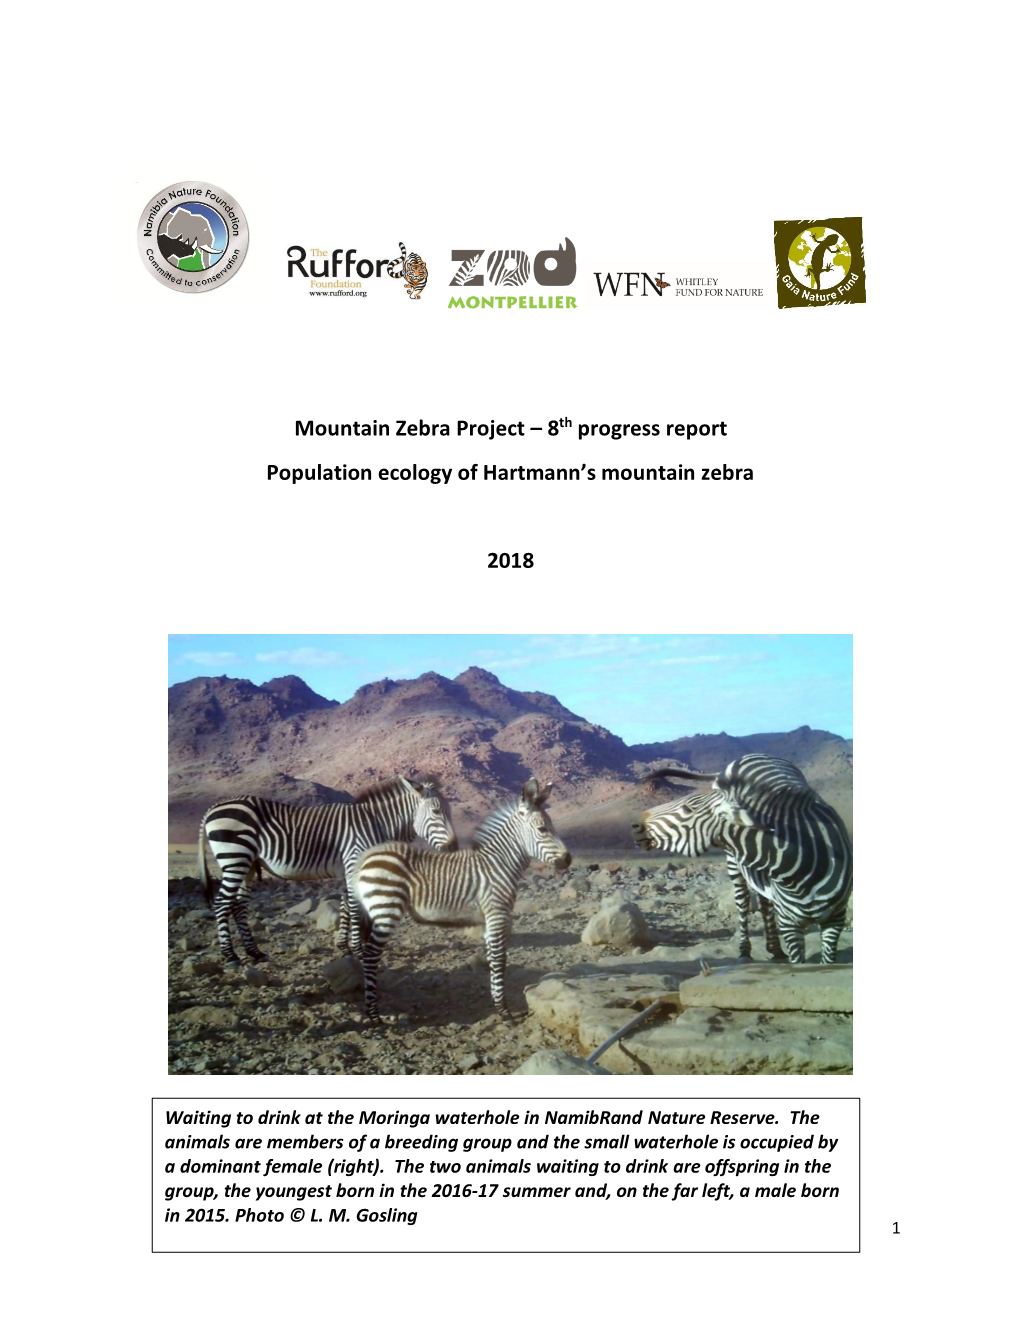 Mountain Zebra Project – 8Th Progress Report Population Ecology of Hartmann’S Mountain Zebra